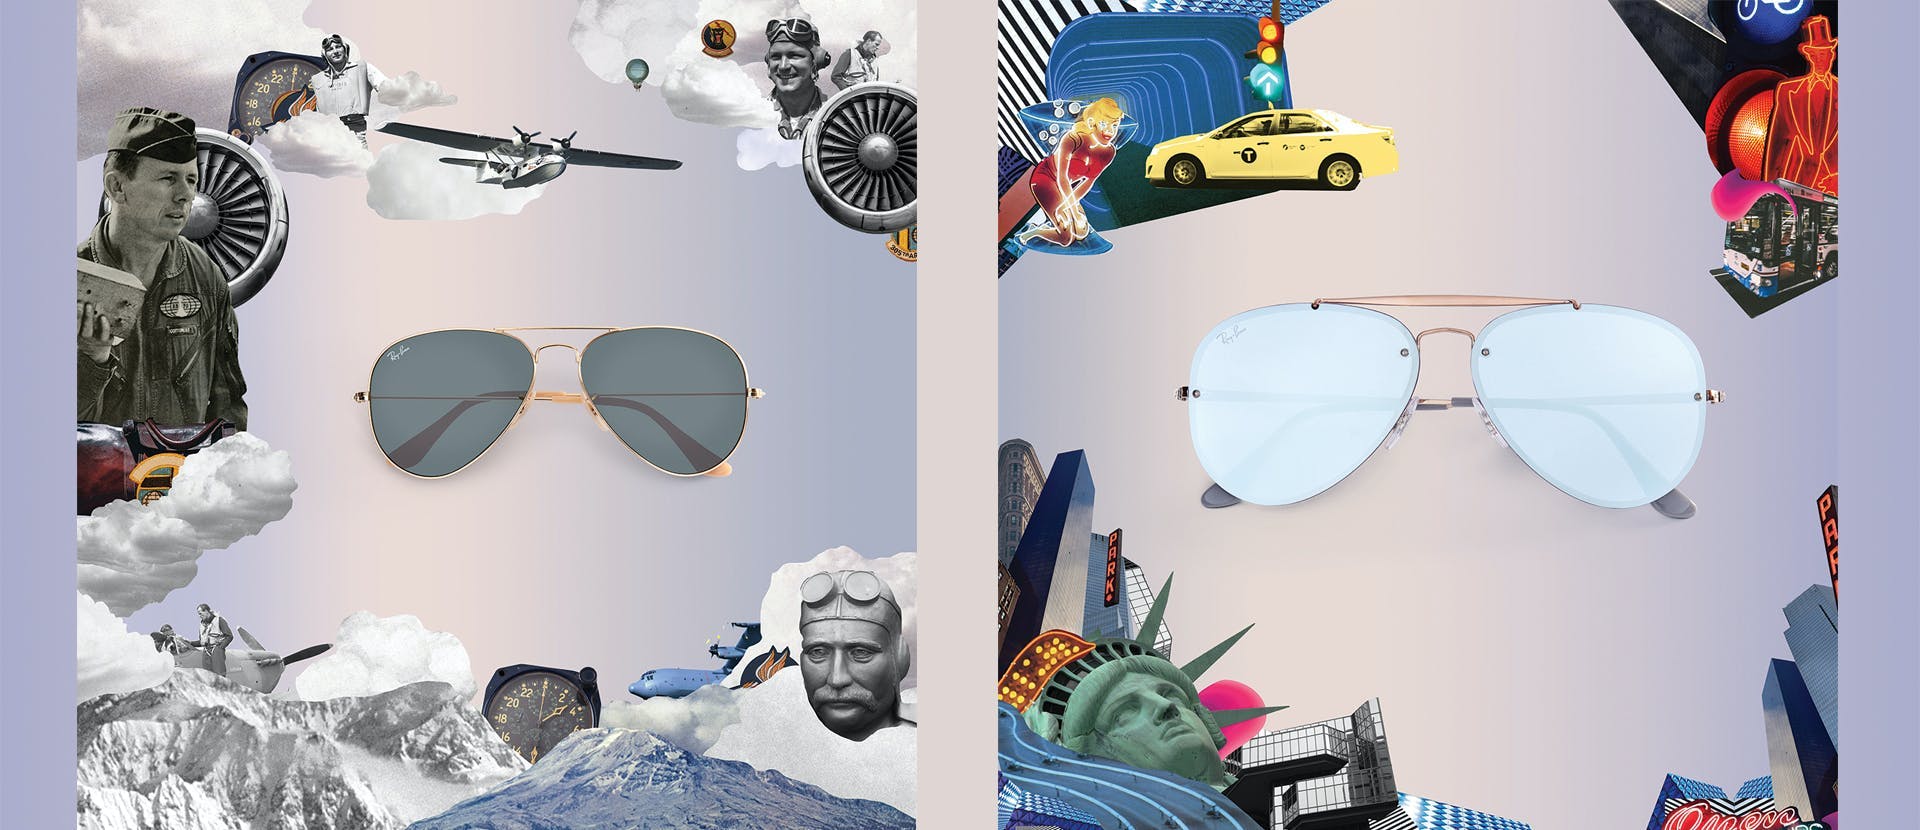 accessories accessory sunglasses poster advertisement collage human person head